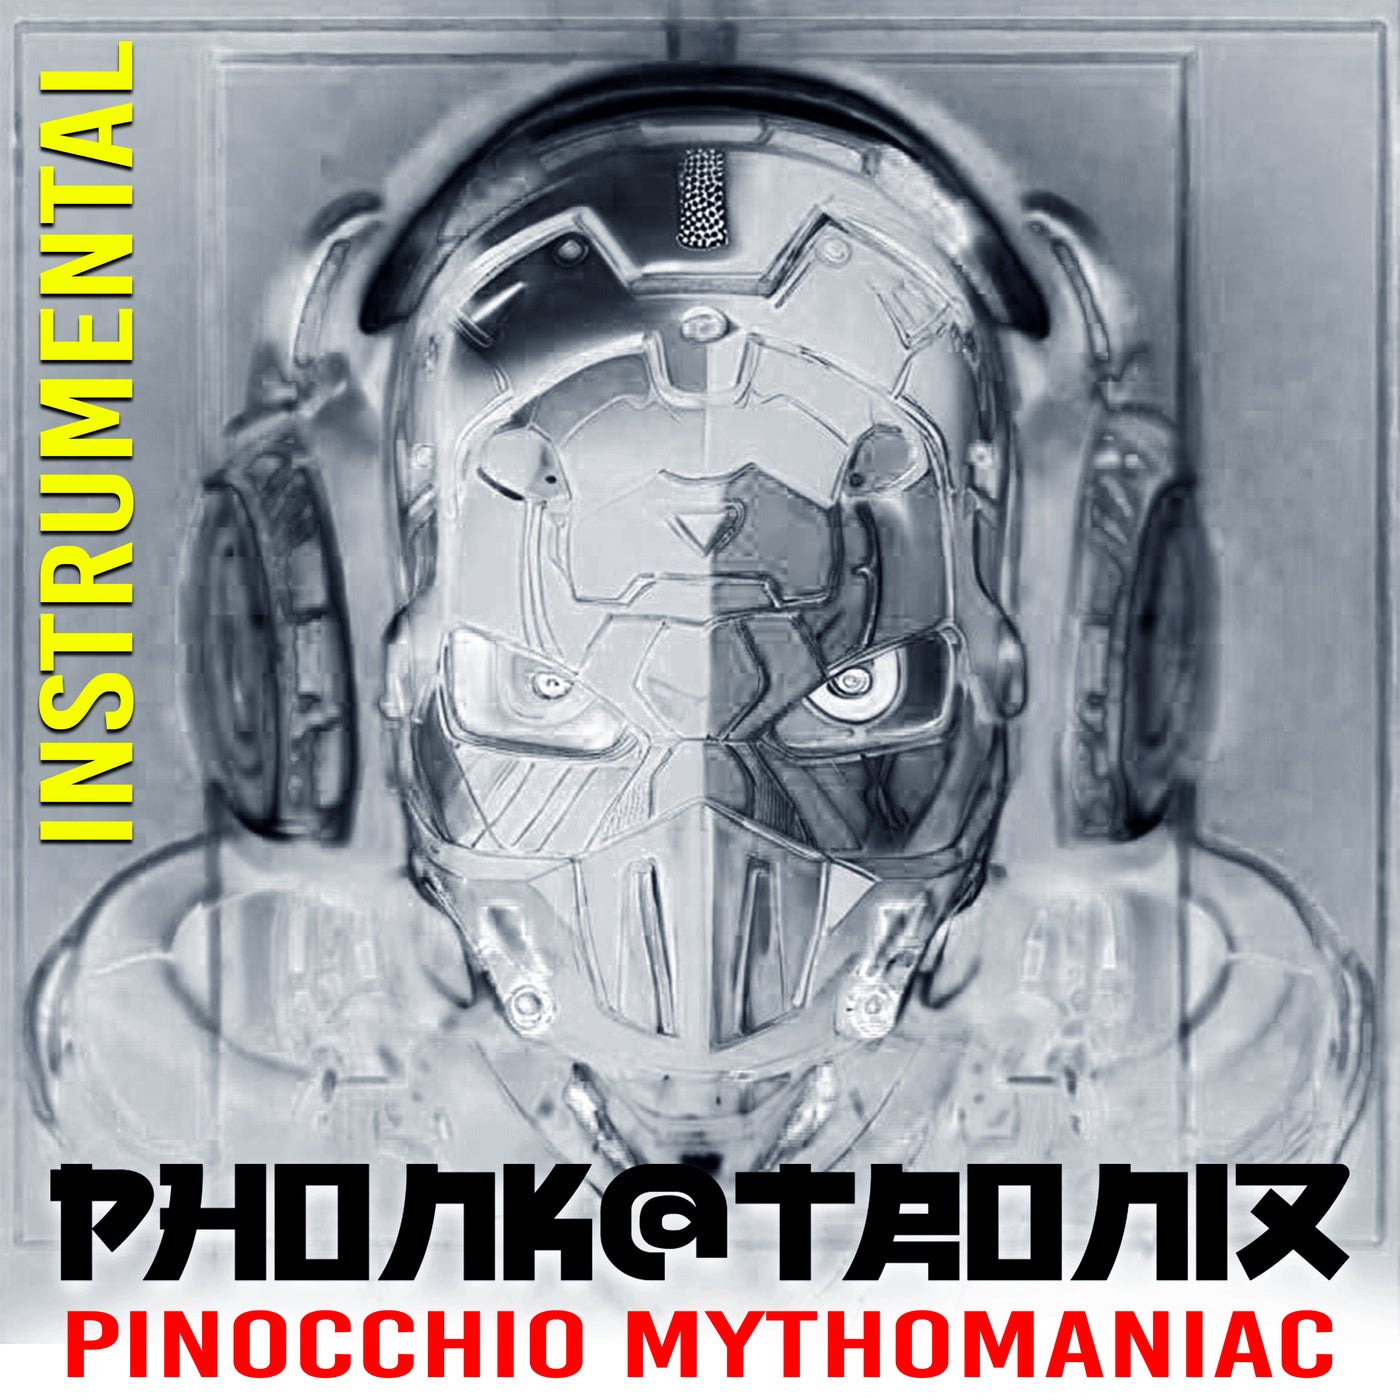 PINOCCHIO MYTHOMANIAC